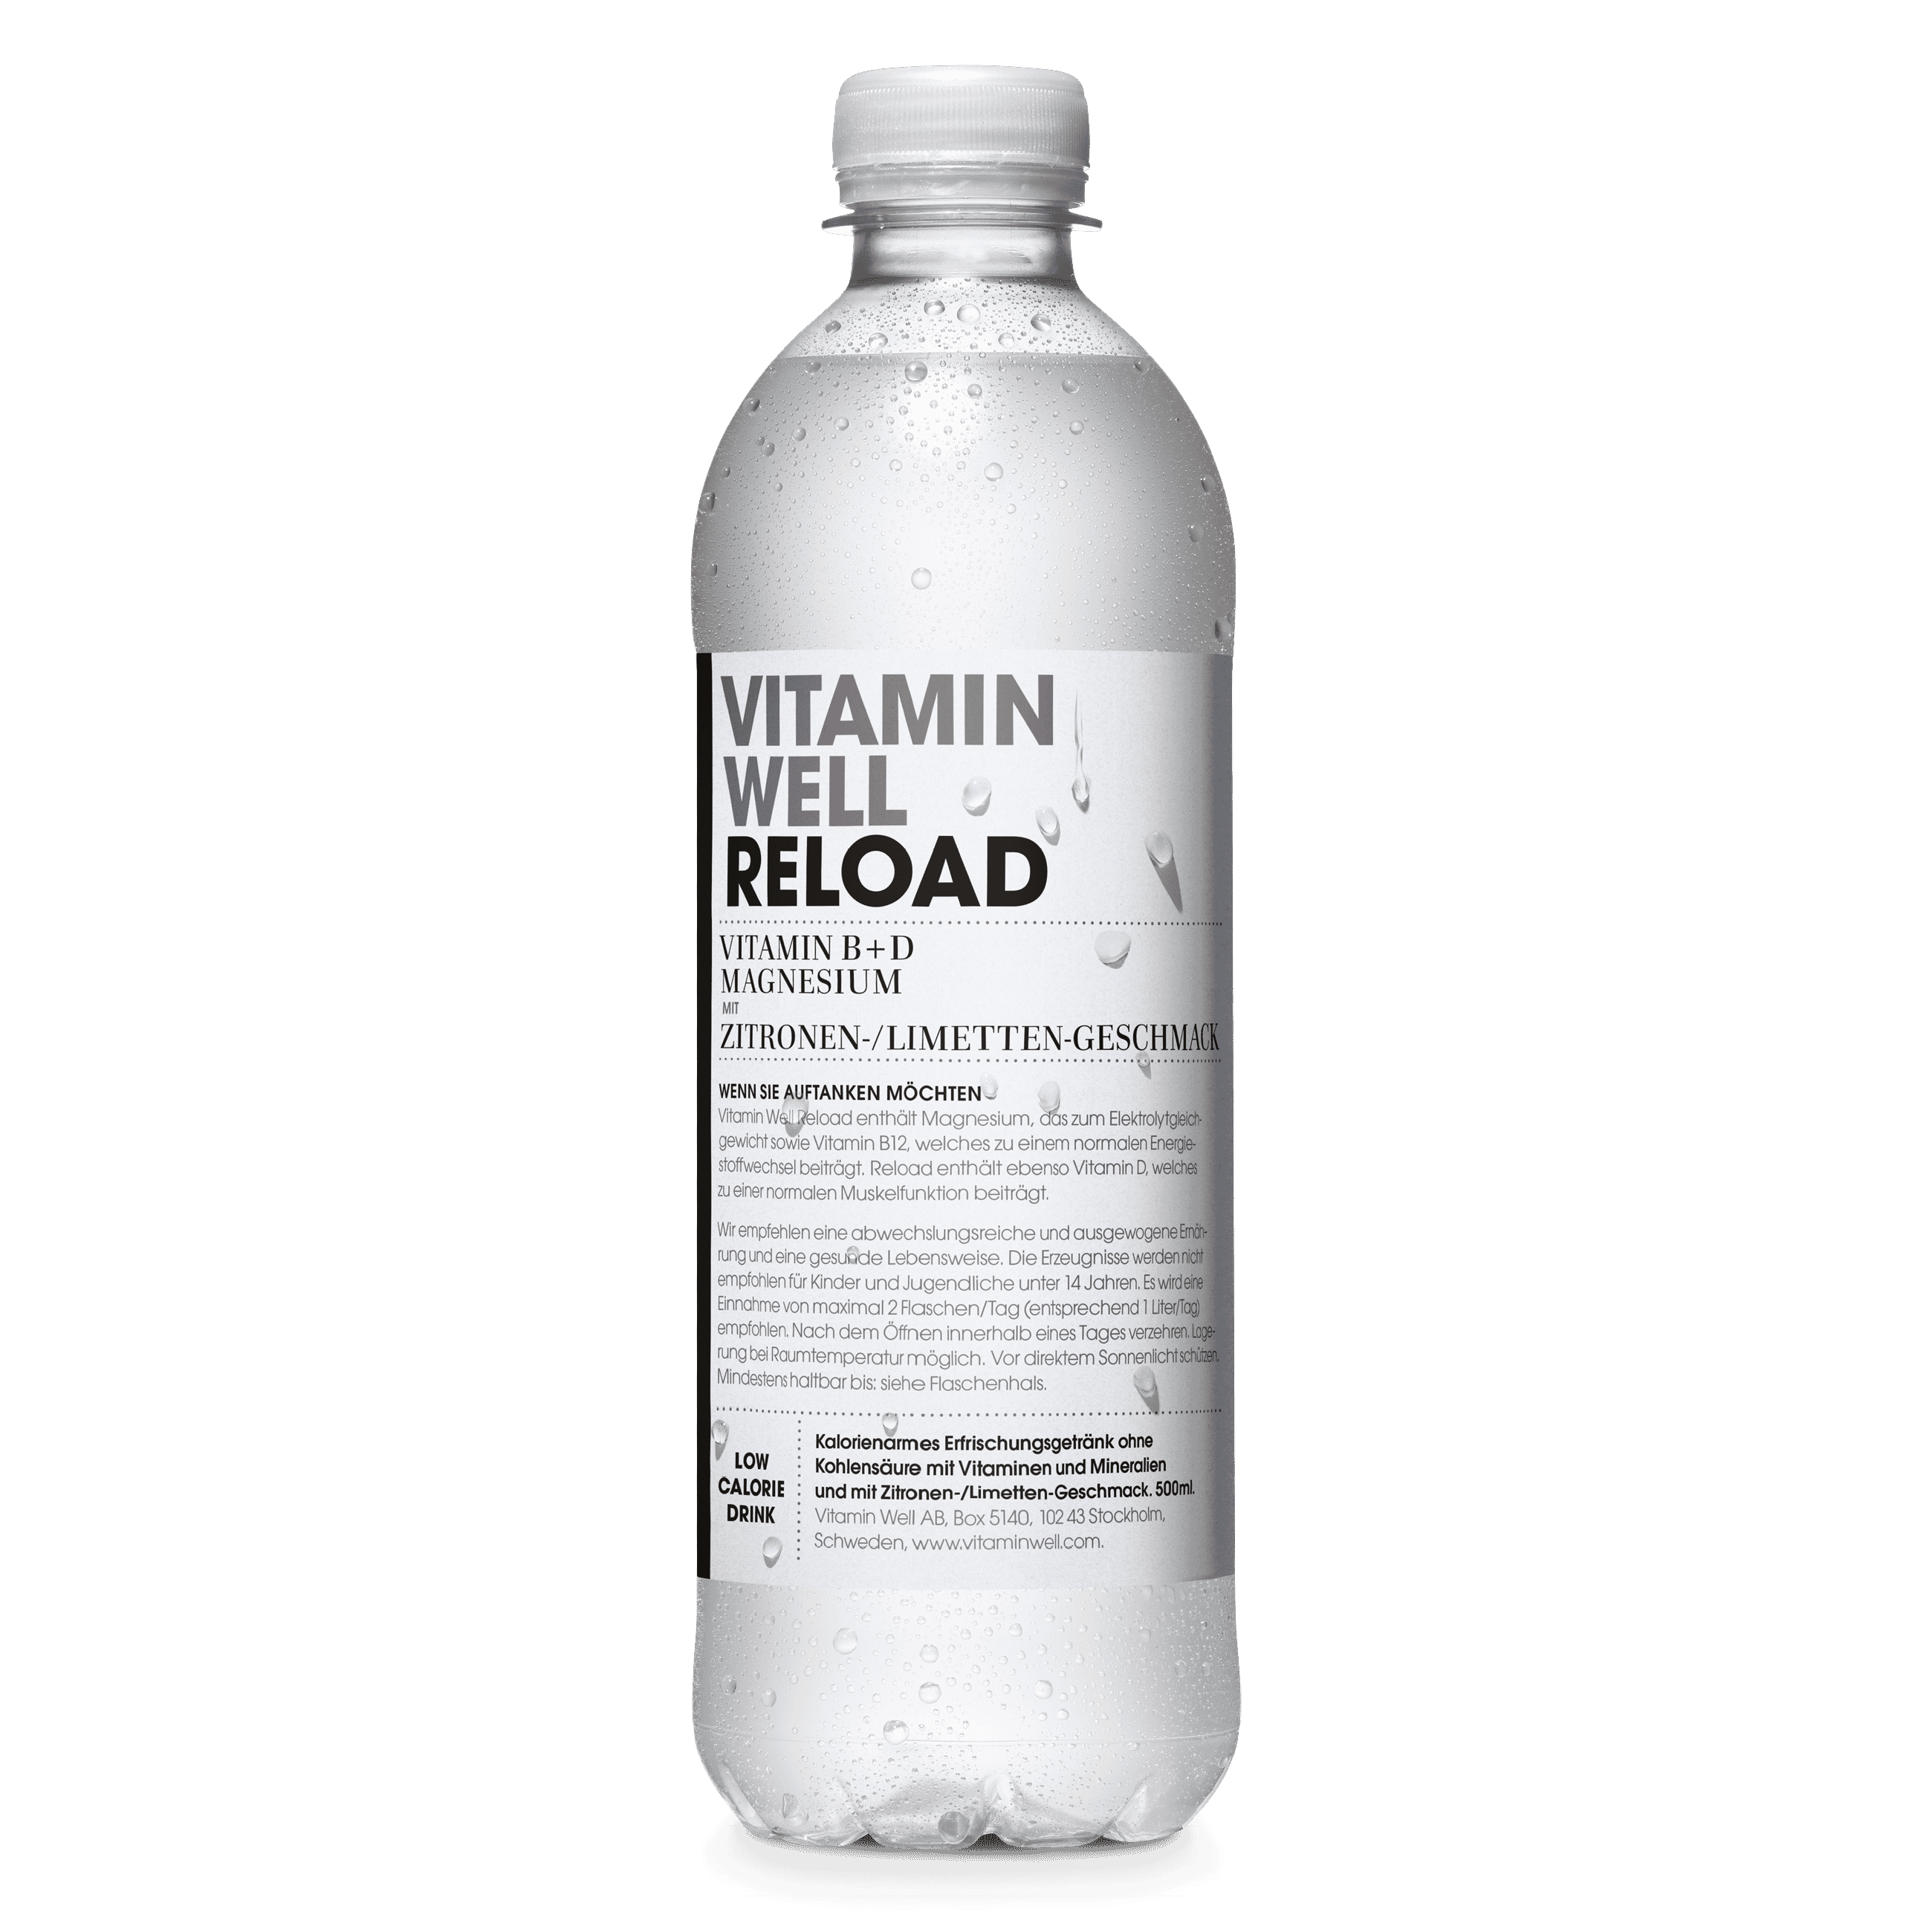 Vitamin Well Reload Flasche